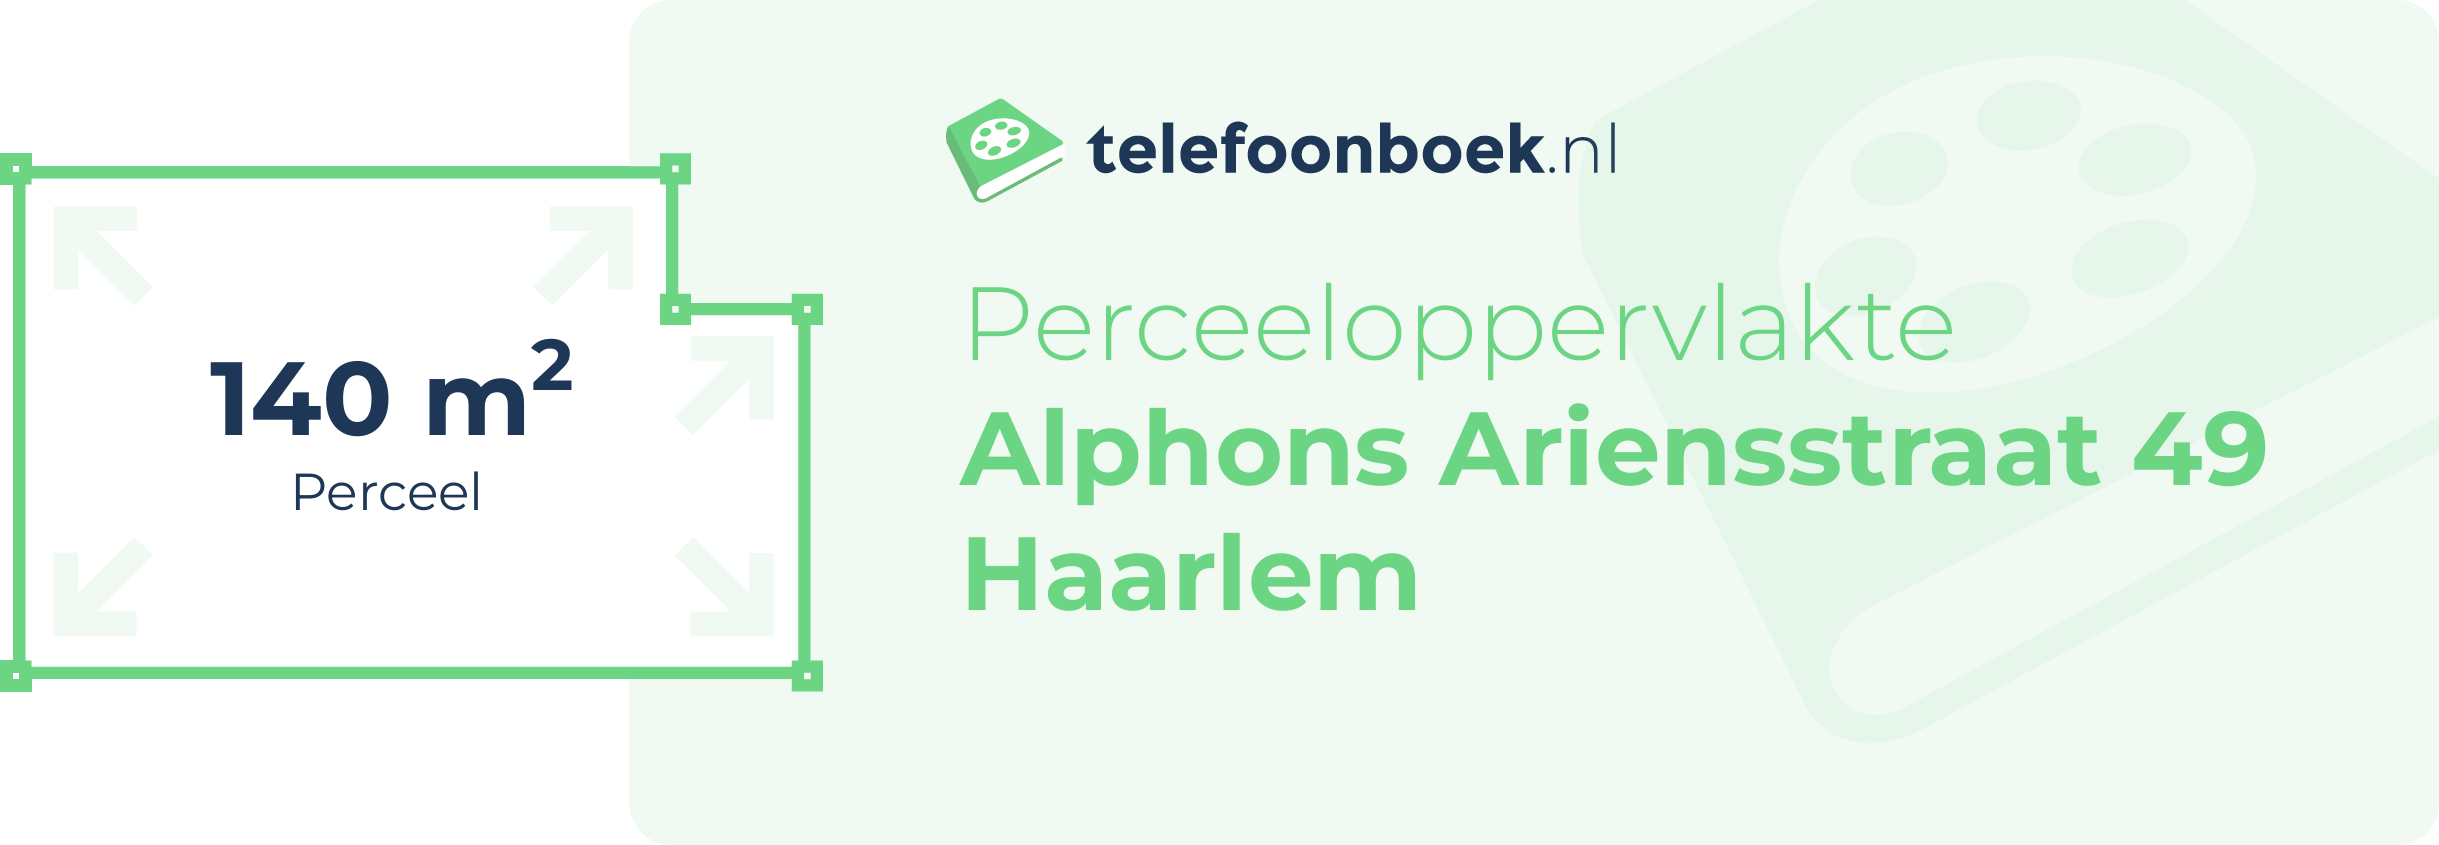 Perceeloppervlakte Alphons Ariensstraat 49 Haarlem